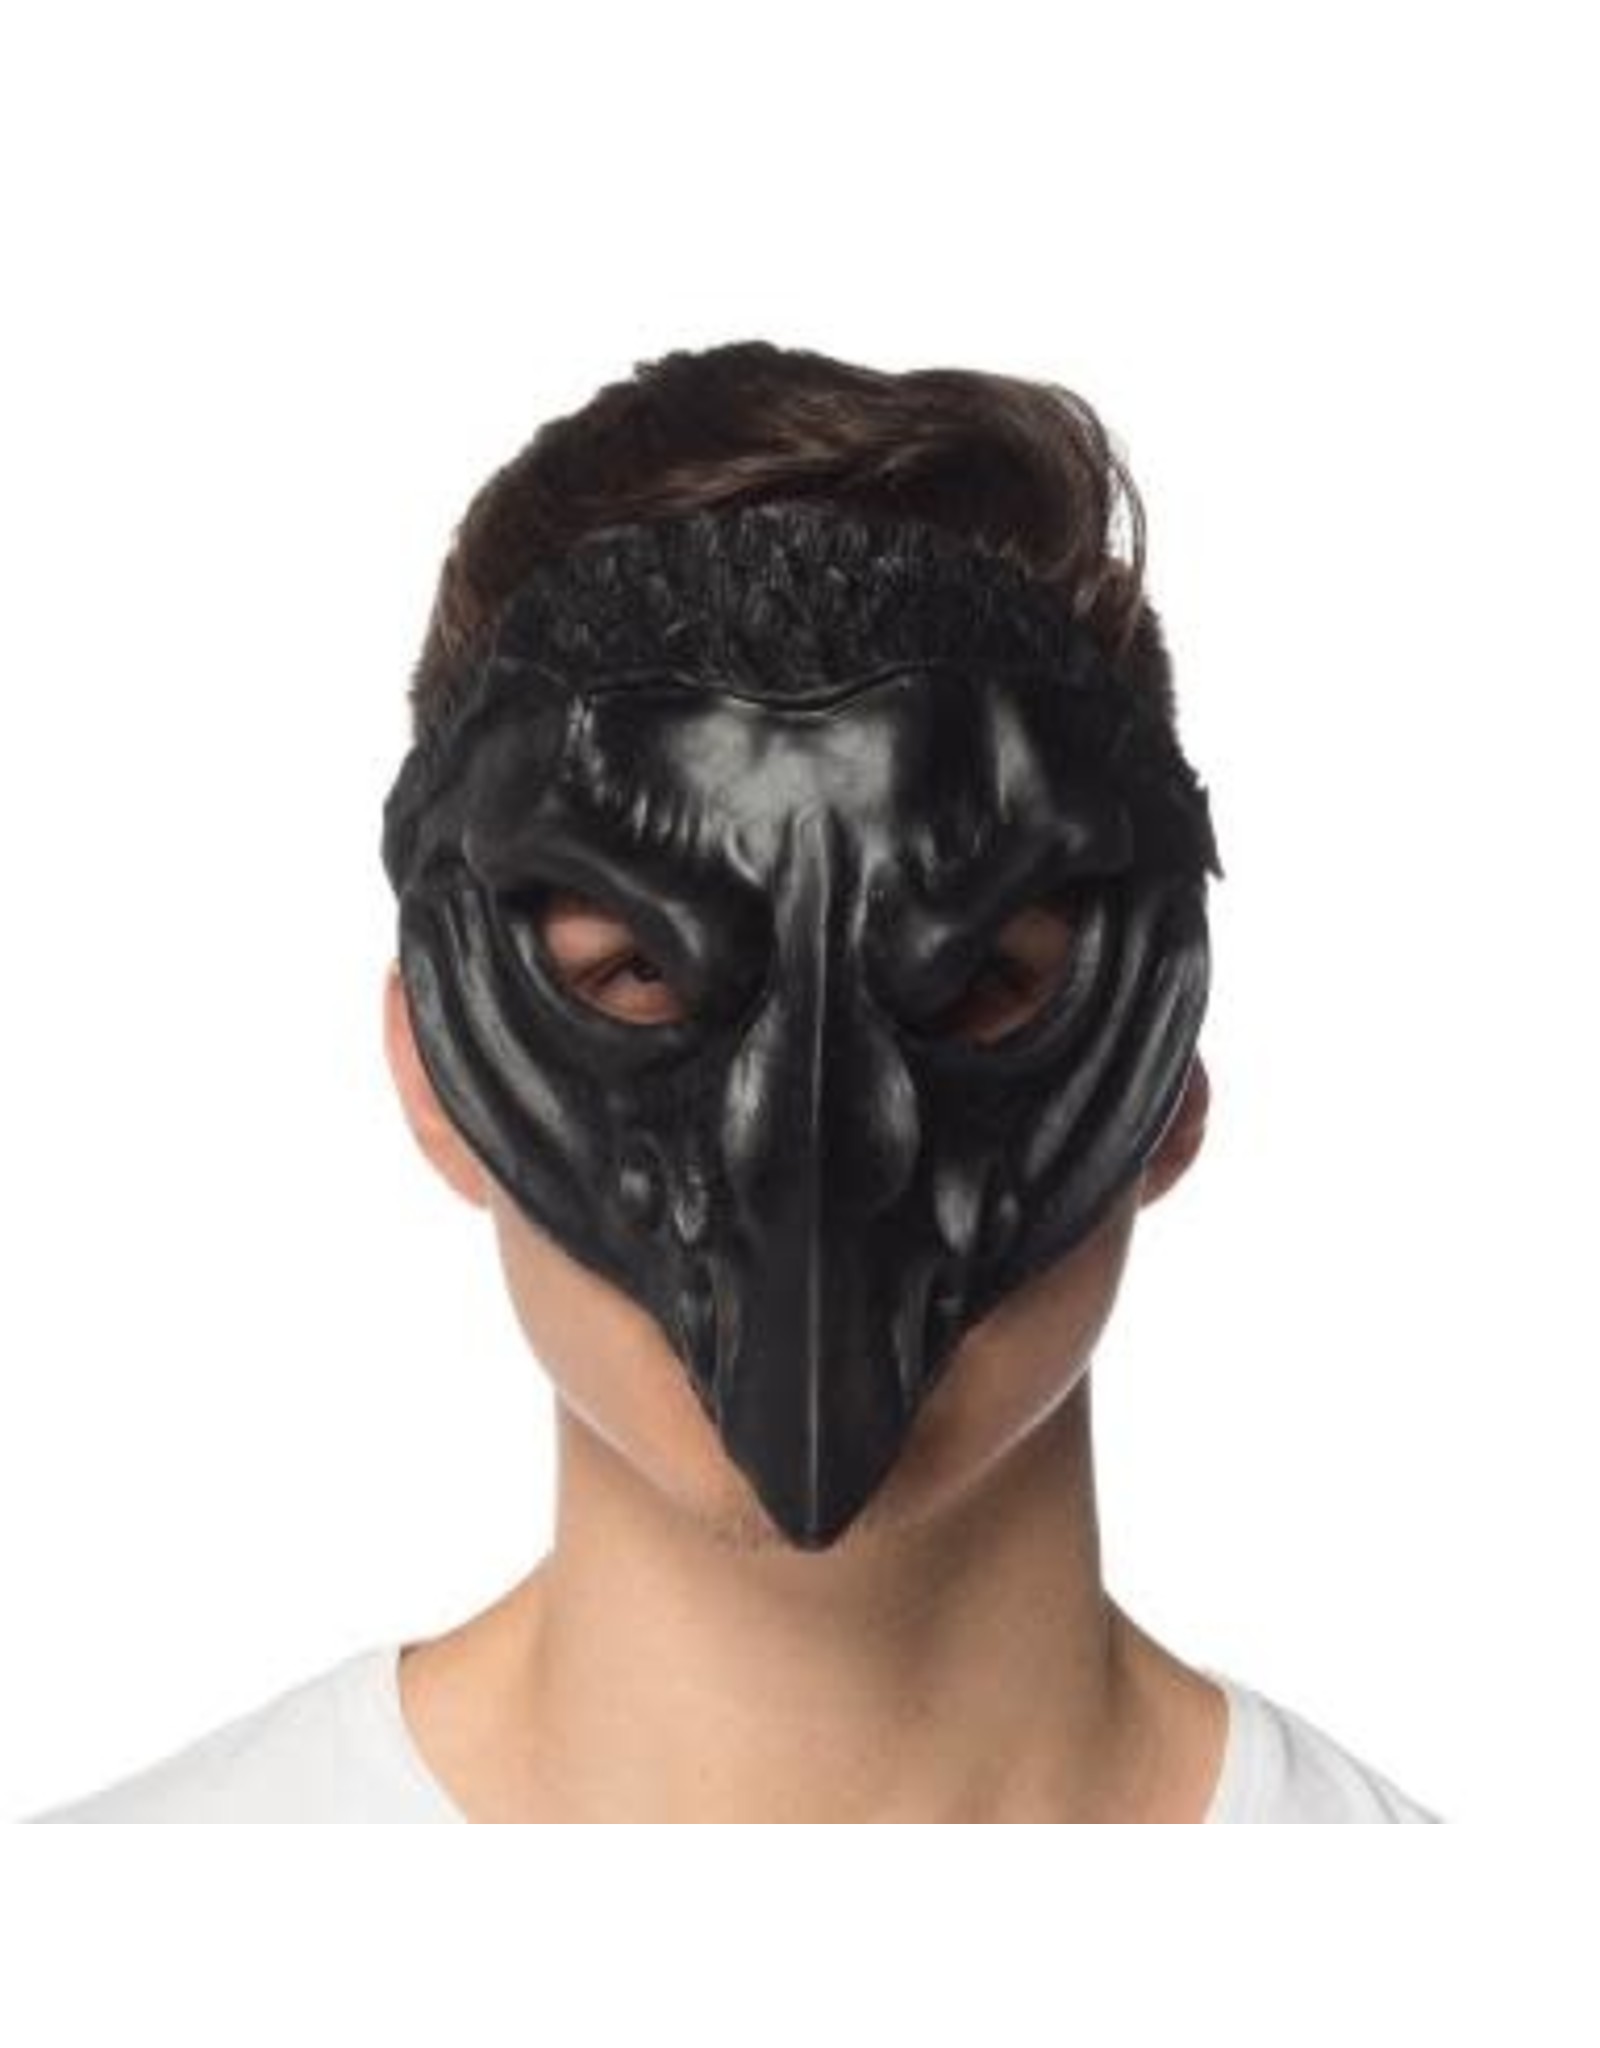 HM Smallwares Crow Mask